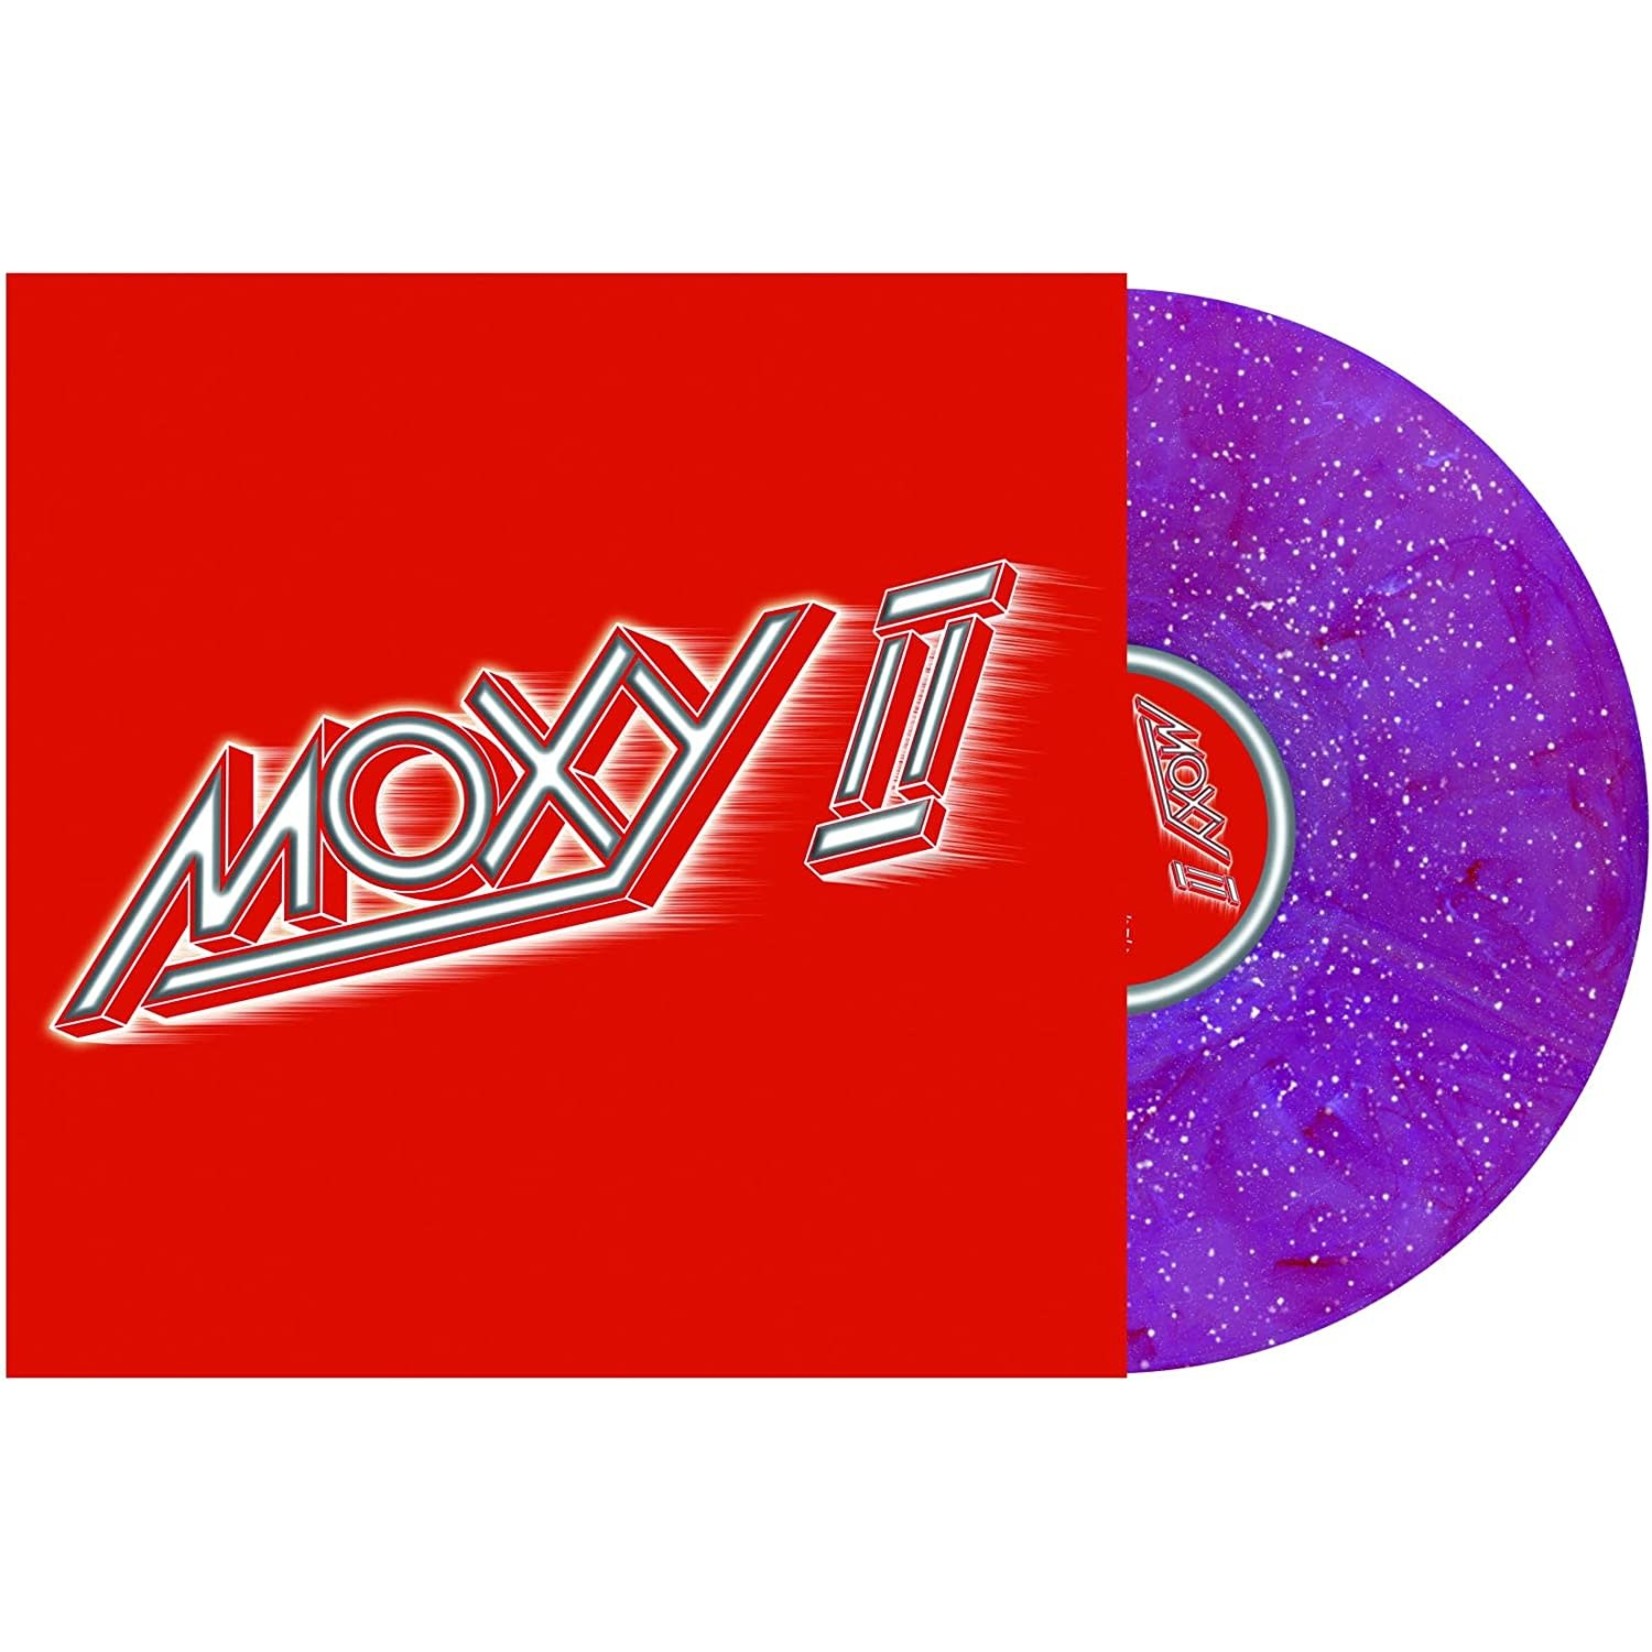 Vinyl Moxy - Moxy II  (Purple & Red Vinyl)